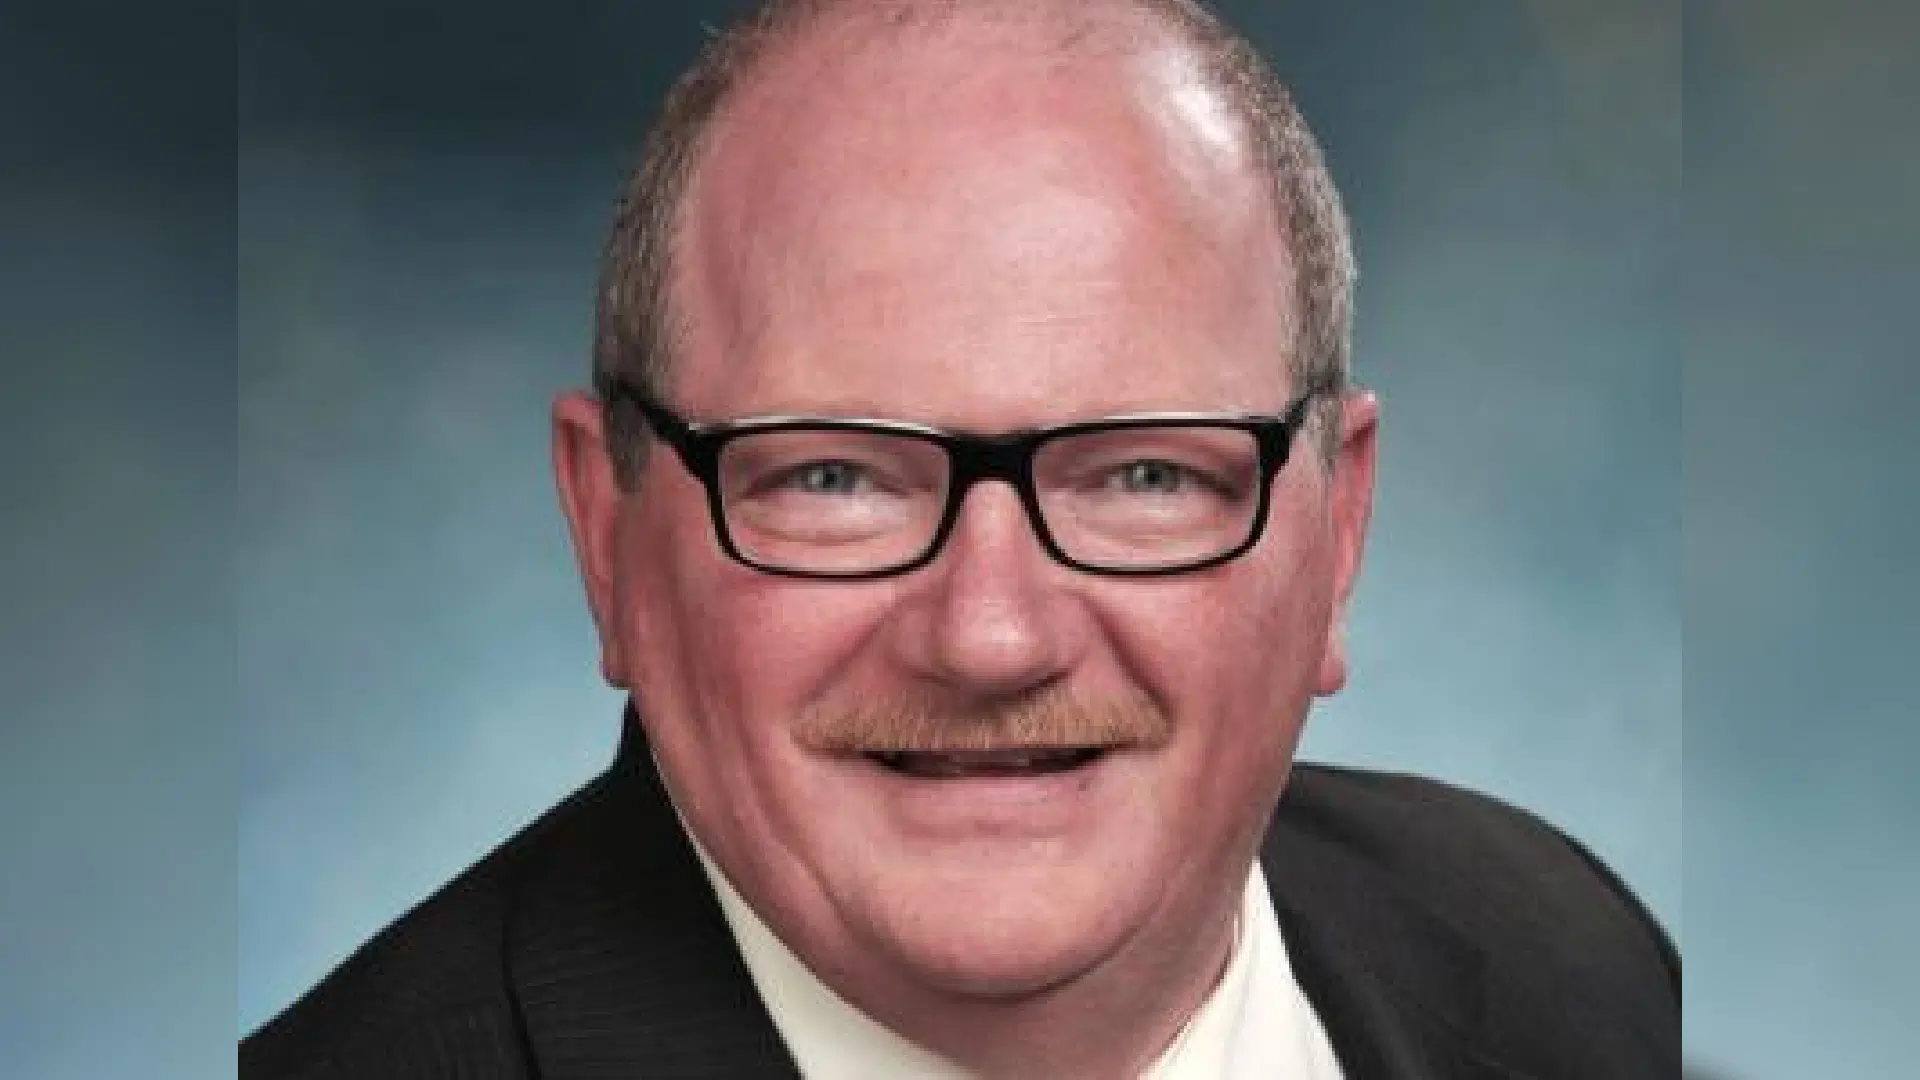 UPDATED: John MacKenzie Elected Deputy Mayor